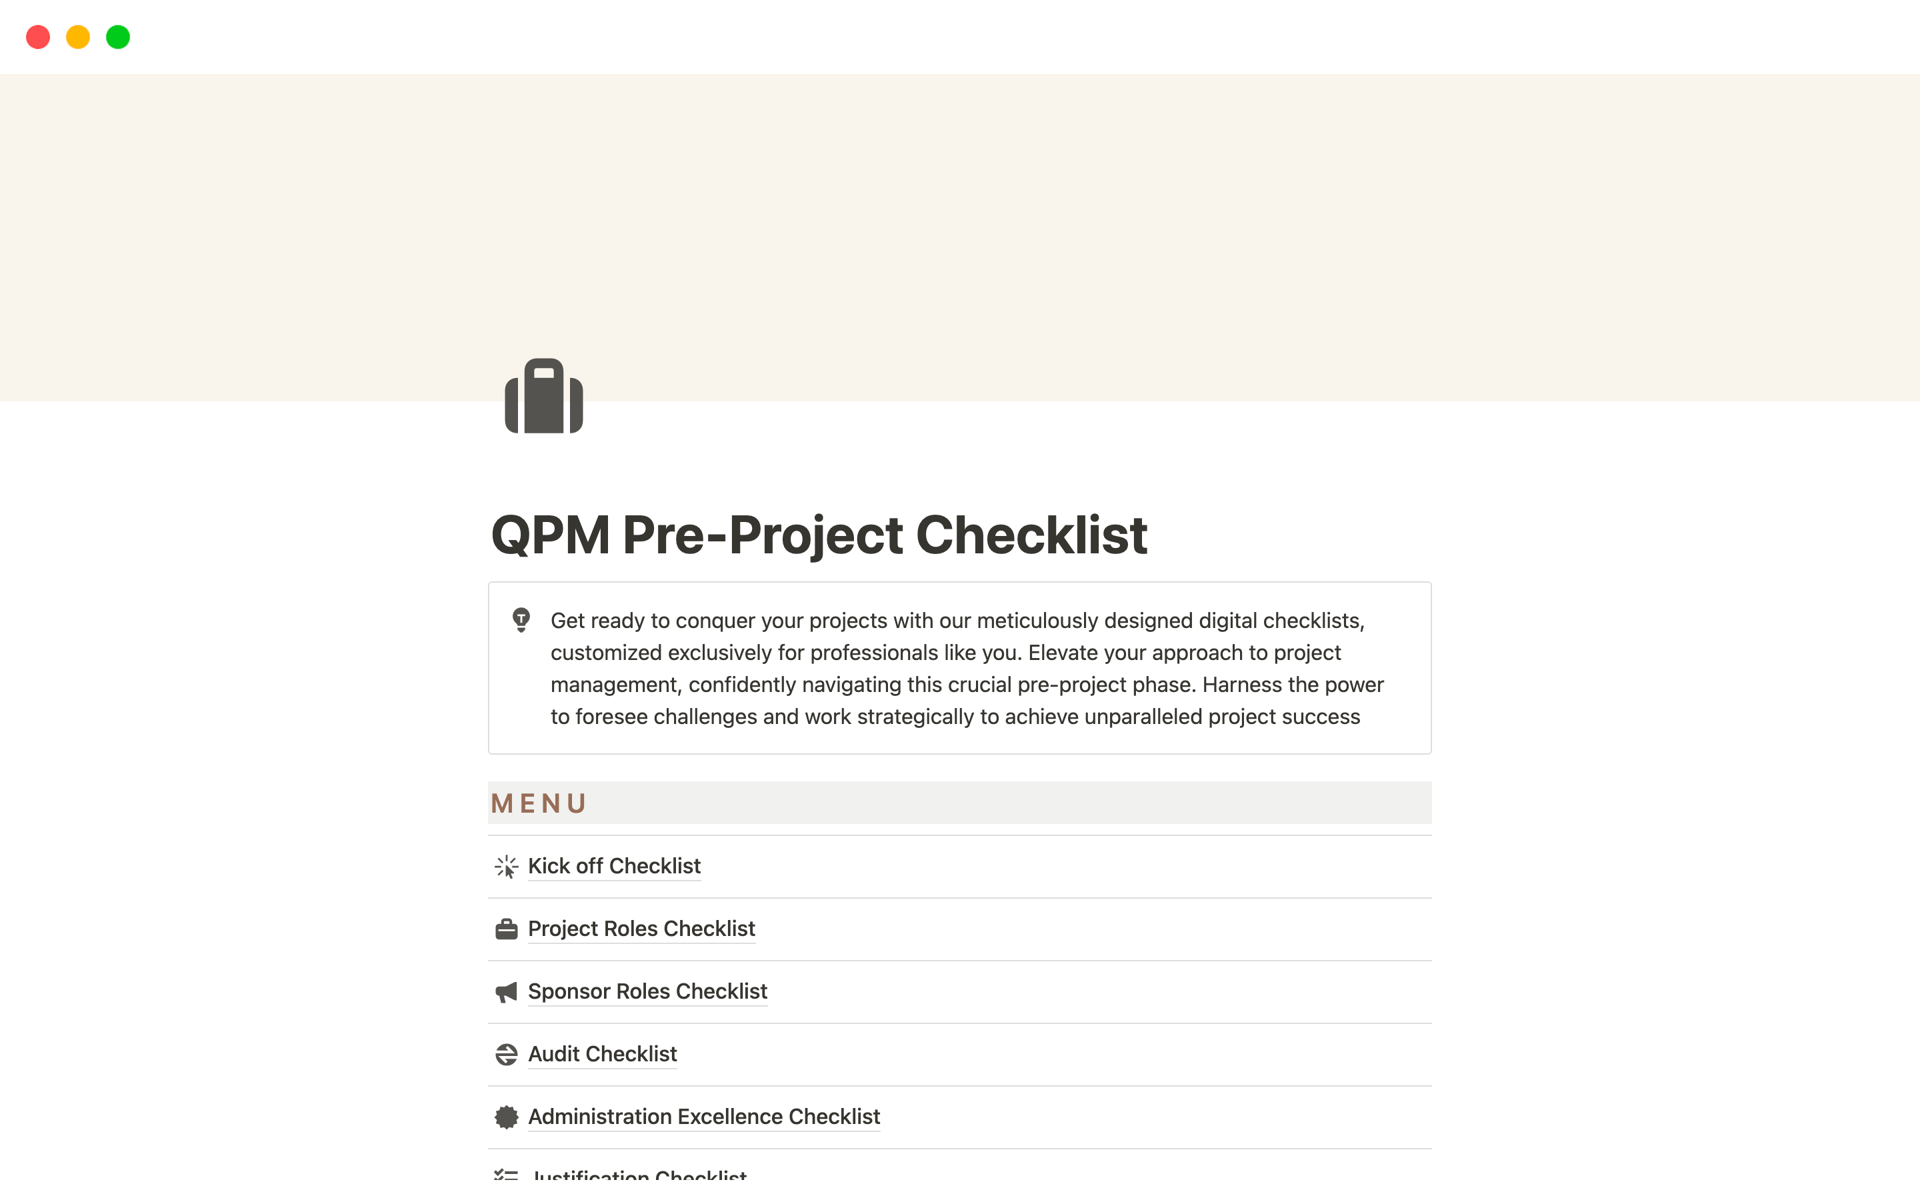 Vista previa de una plantilla para QPM Pre-Project Checklist